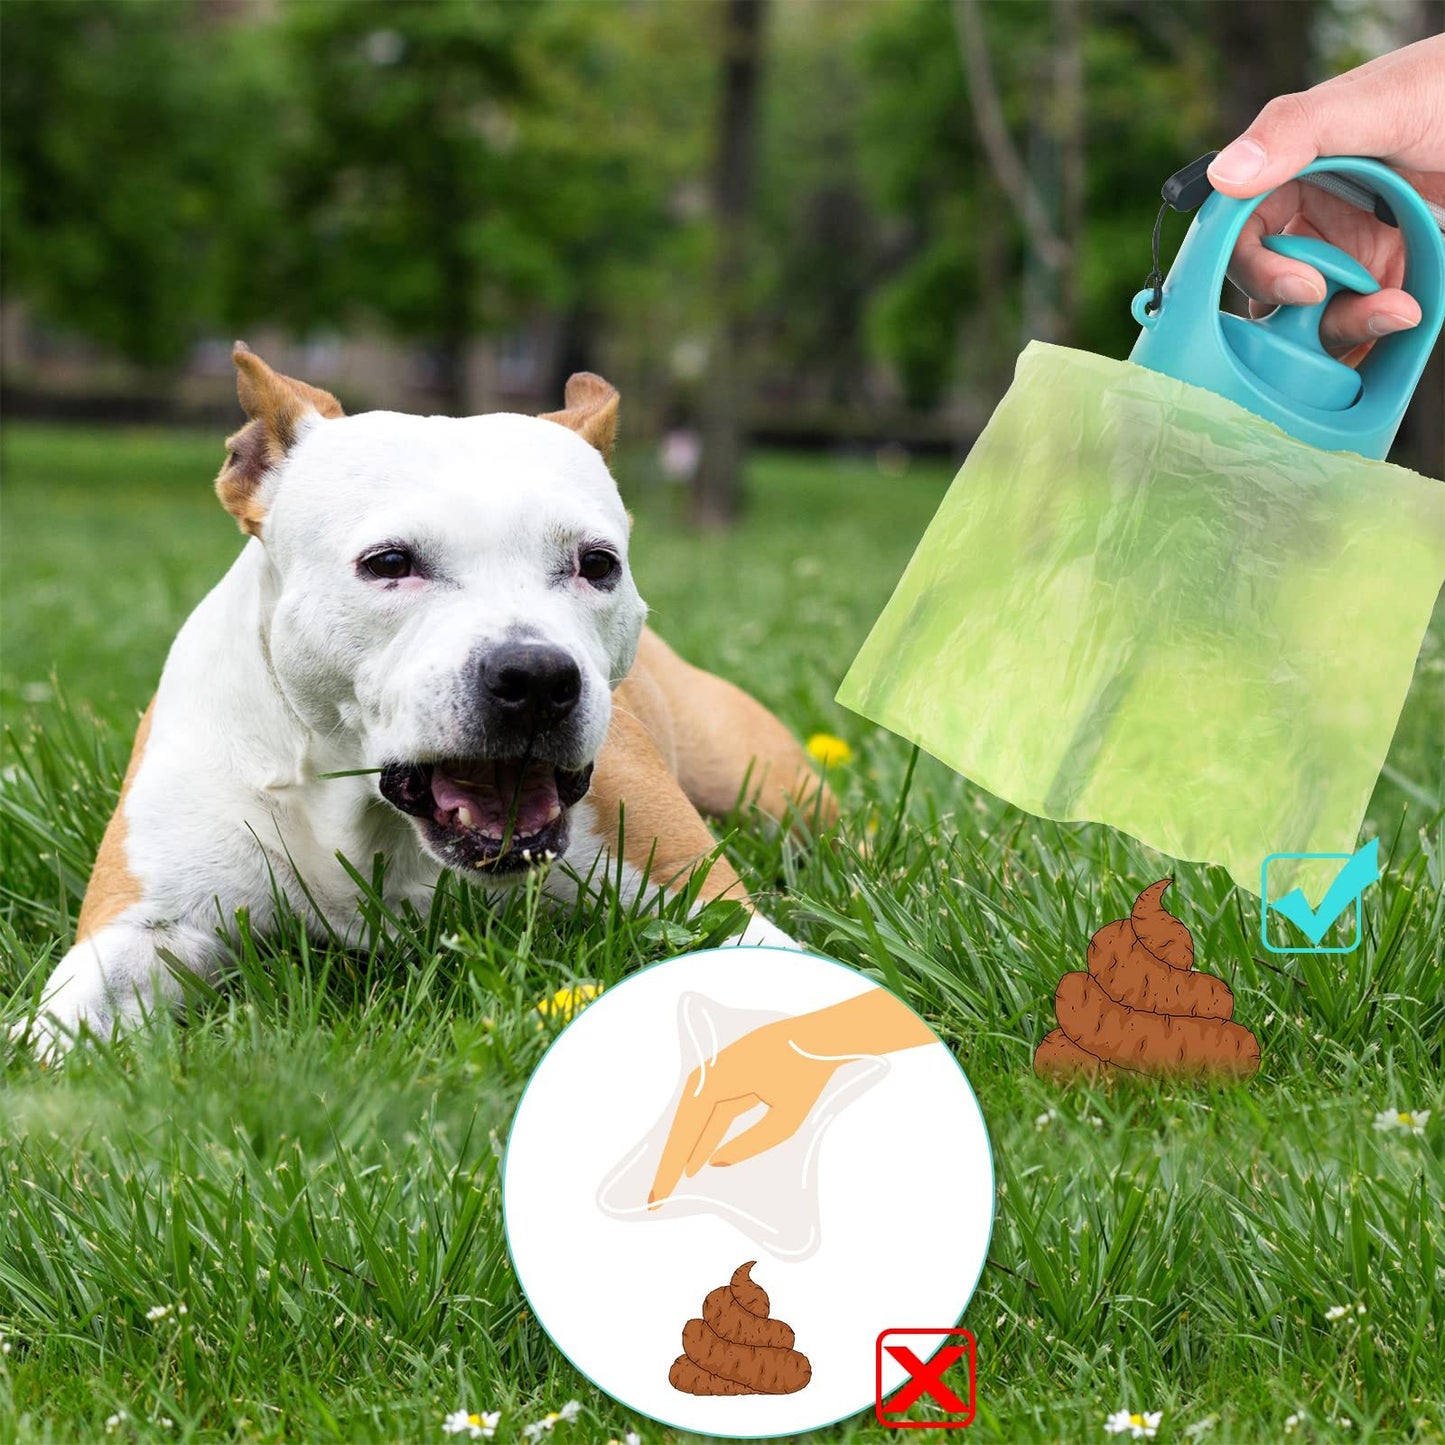 Portable Dog Poop Scooper